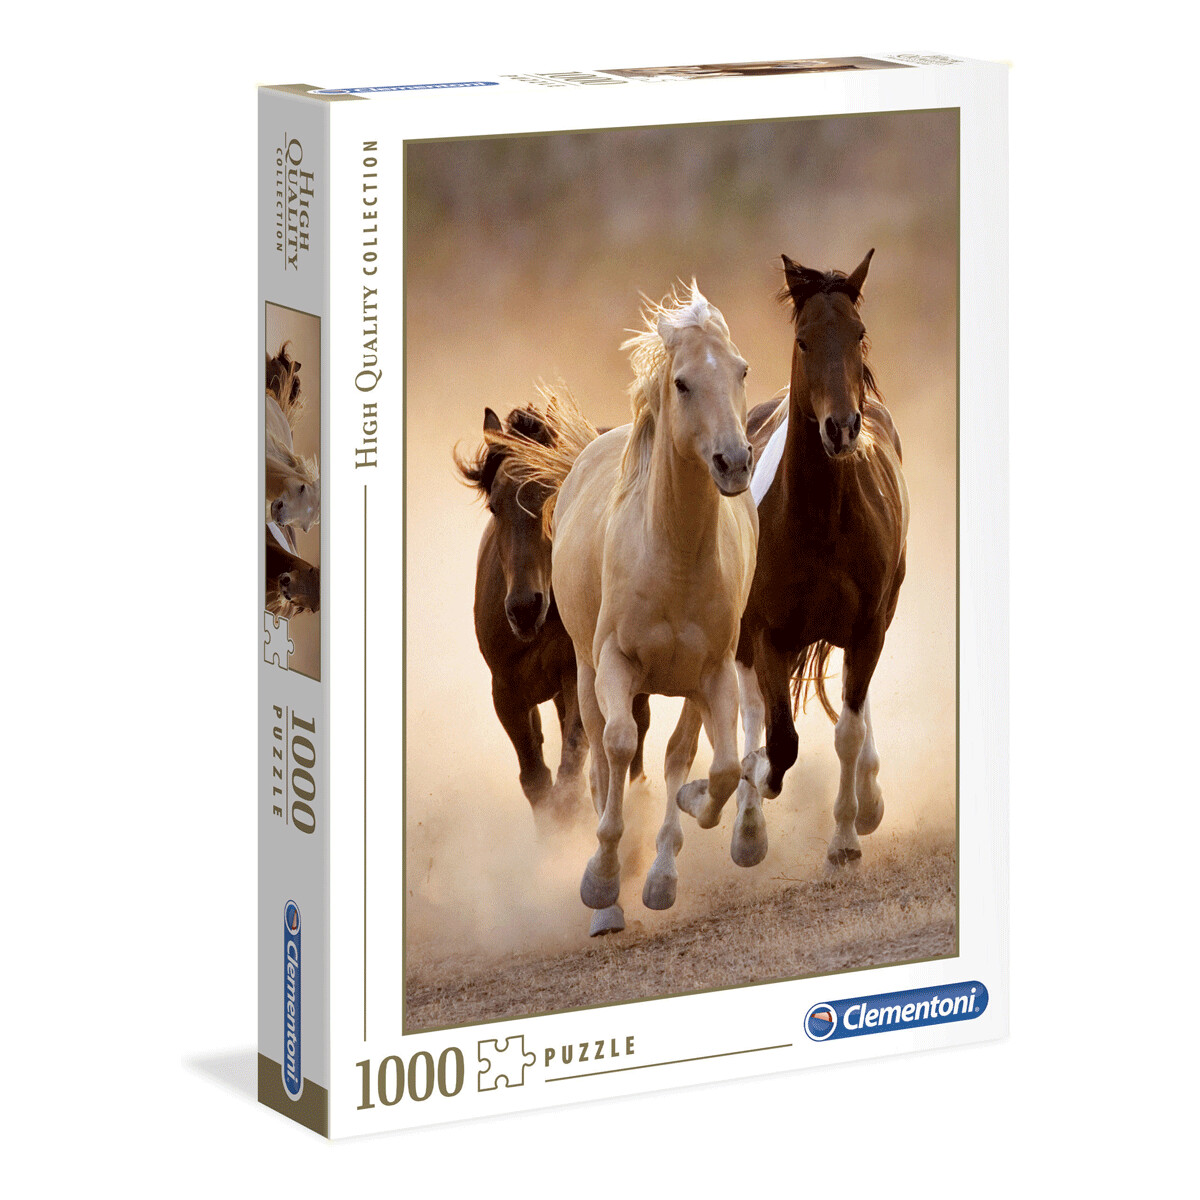 Clementoni - 39168 - puzzle 1000 hqc running horses 70 x 50 cm - CLEMENTONI